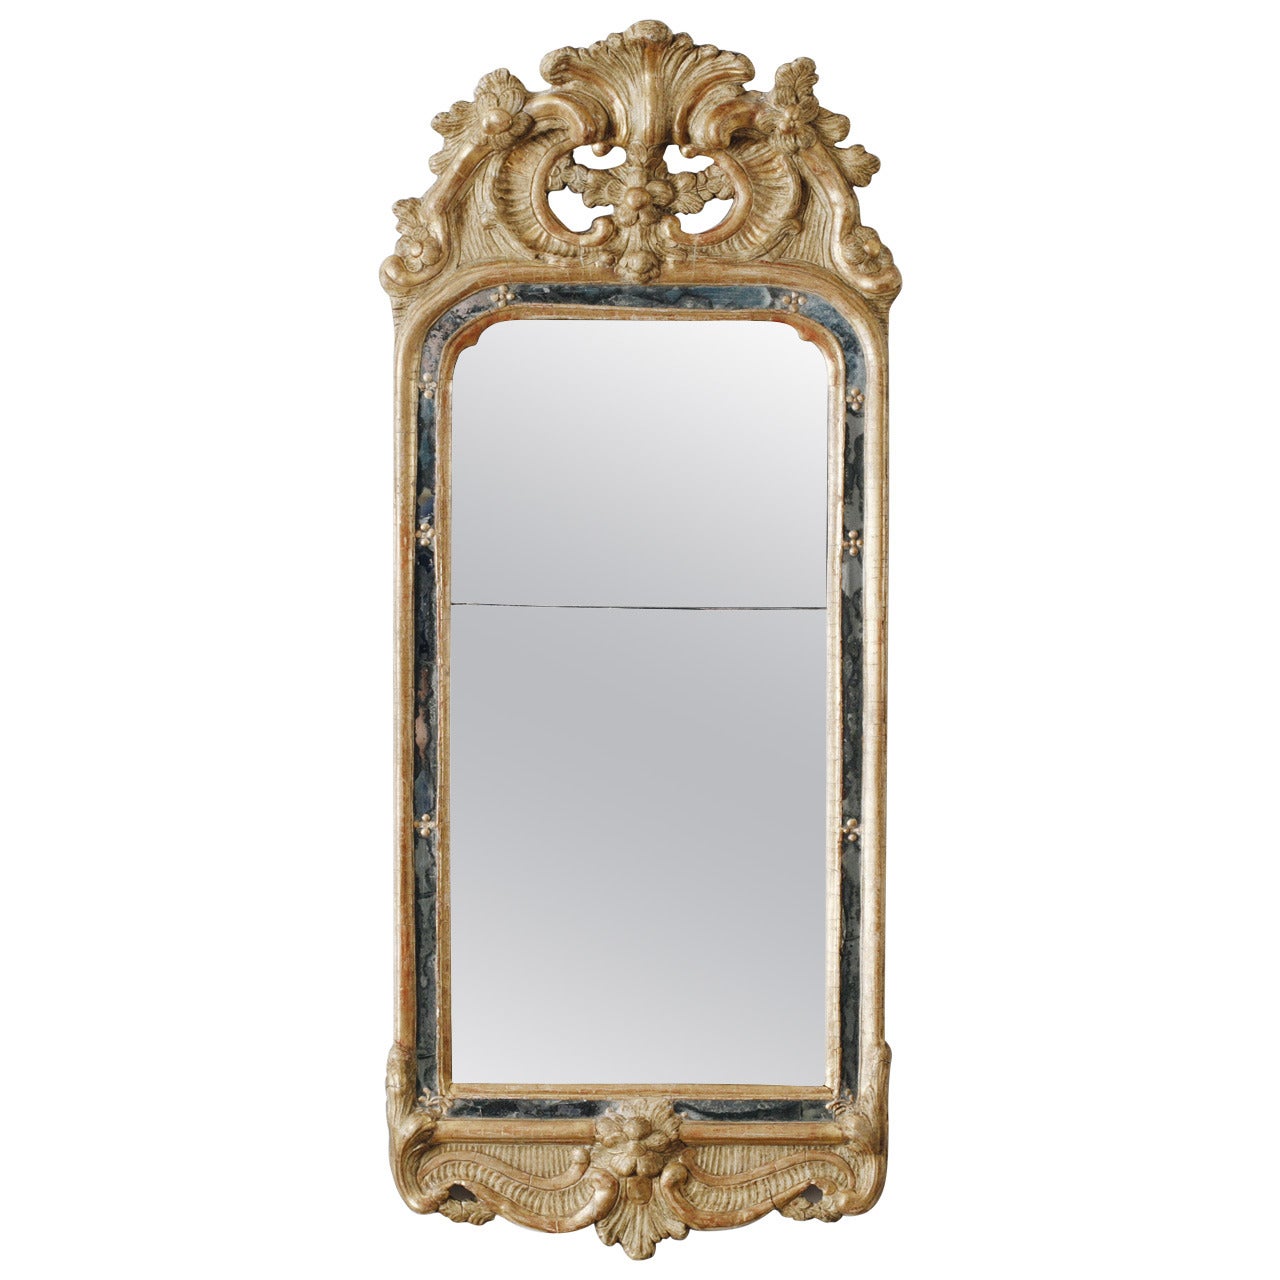 18th Century Swedish Rococo Mirror